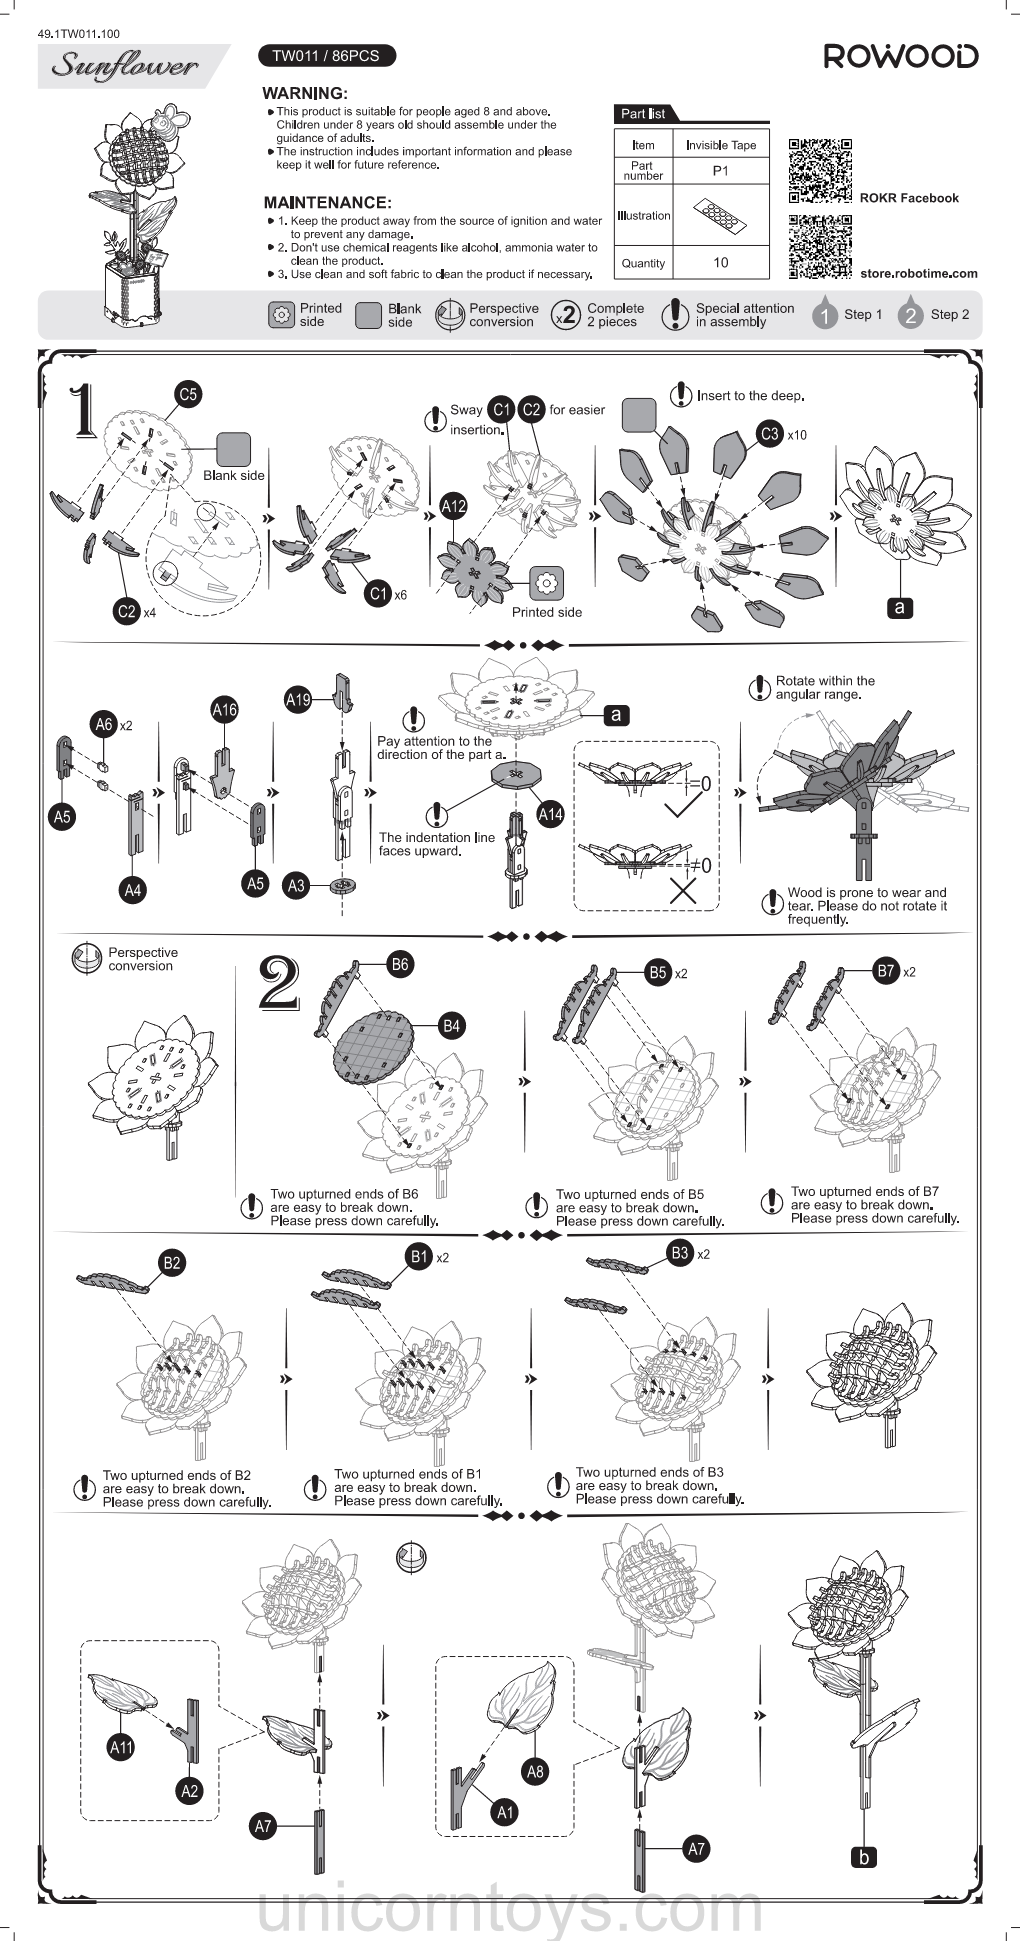 TW011 - Sunflower Rowood Bloom Craft Manual